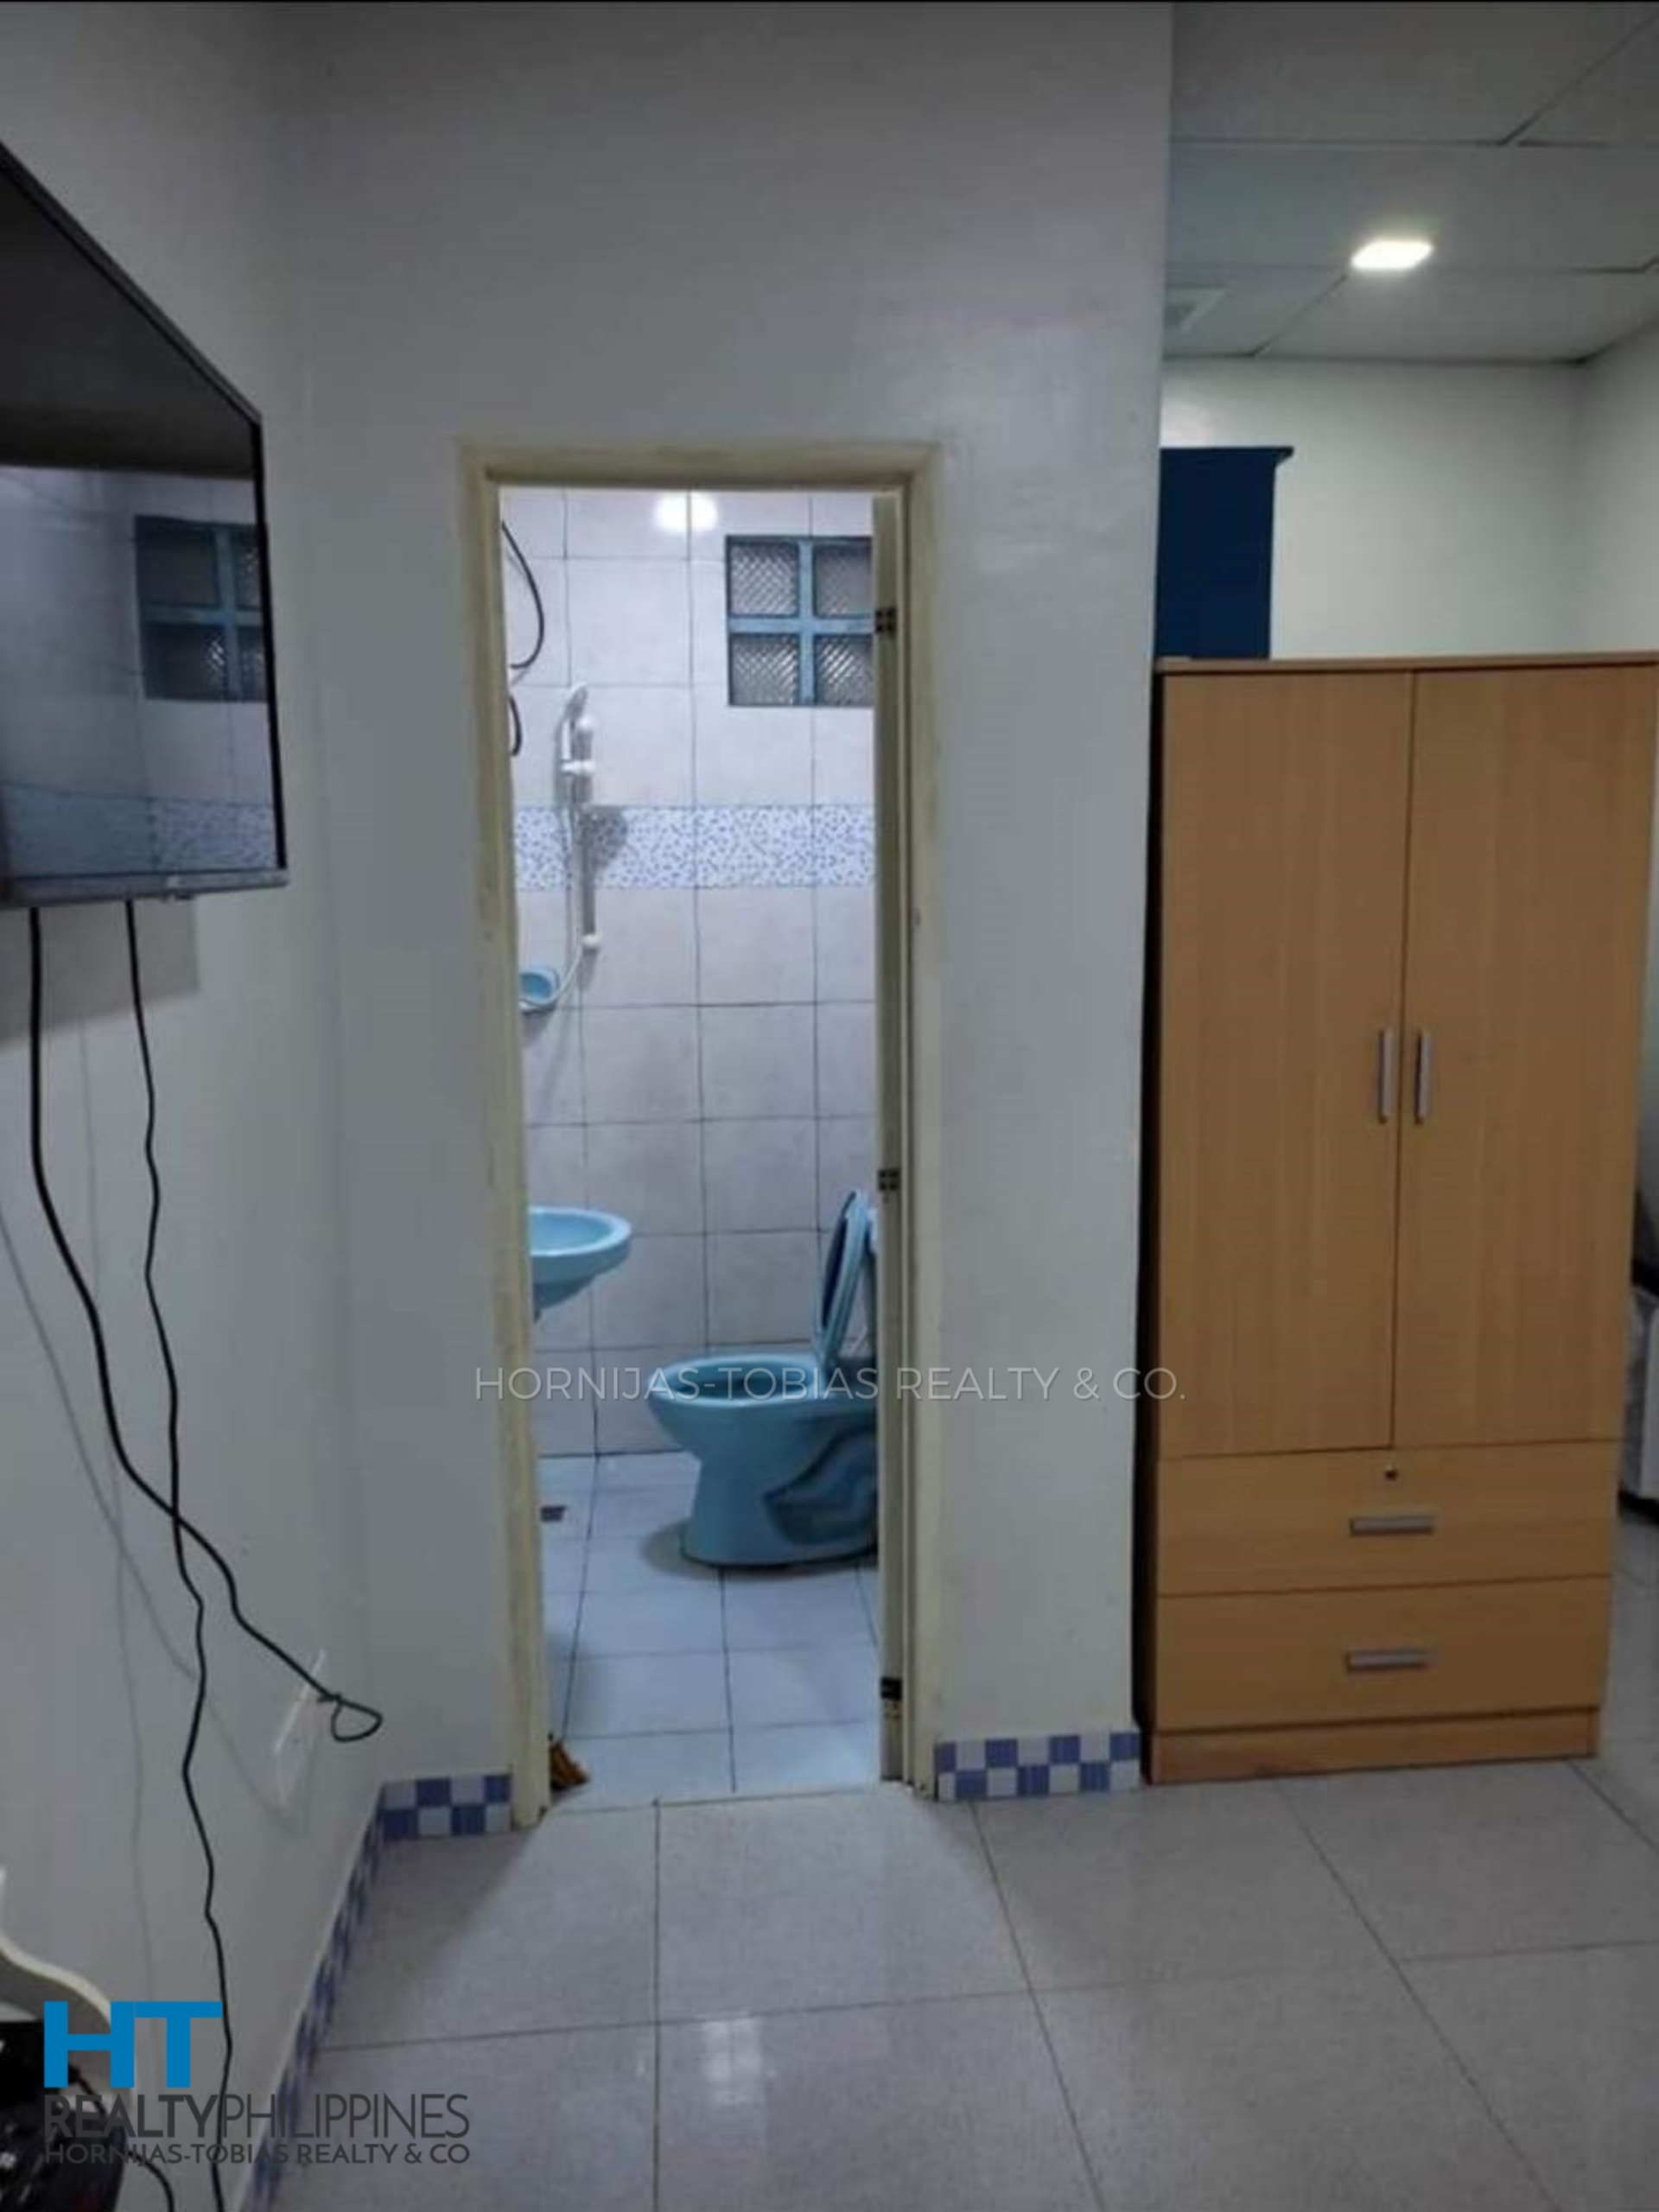 Bathroom - 12-door 4-floor income-generating apartment building for sale in Buhangin, Davao City